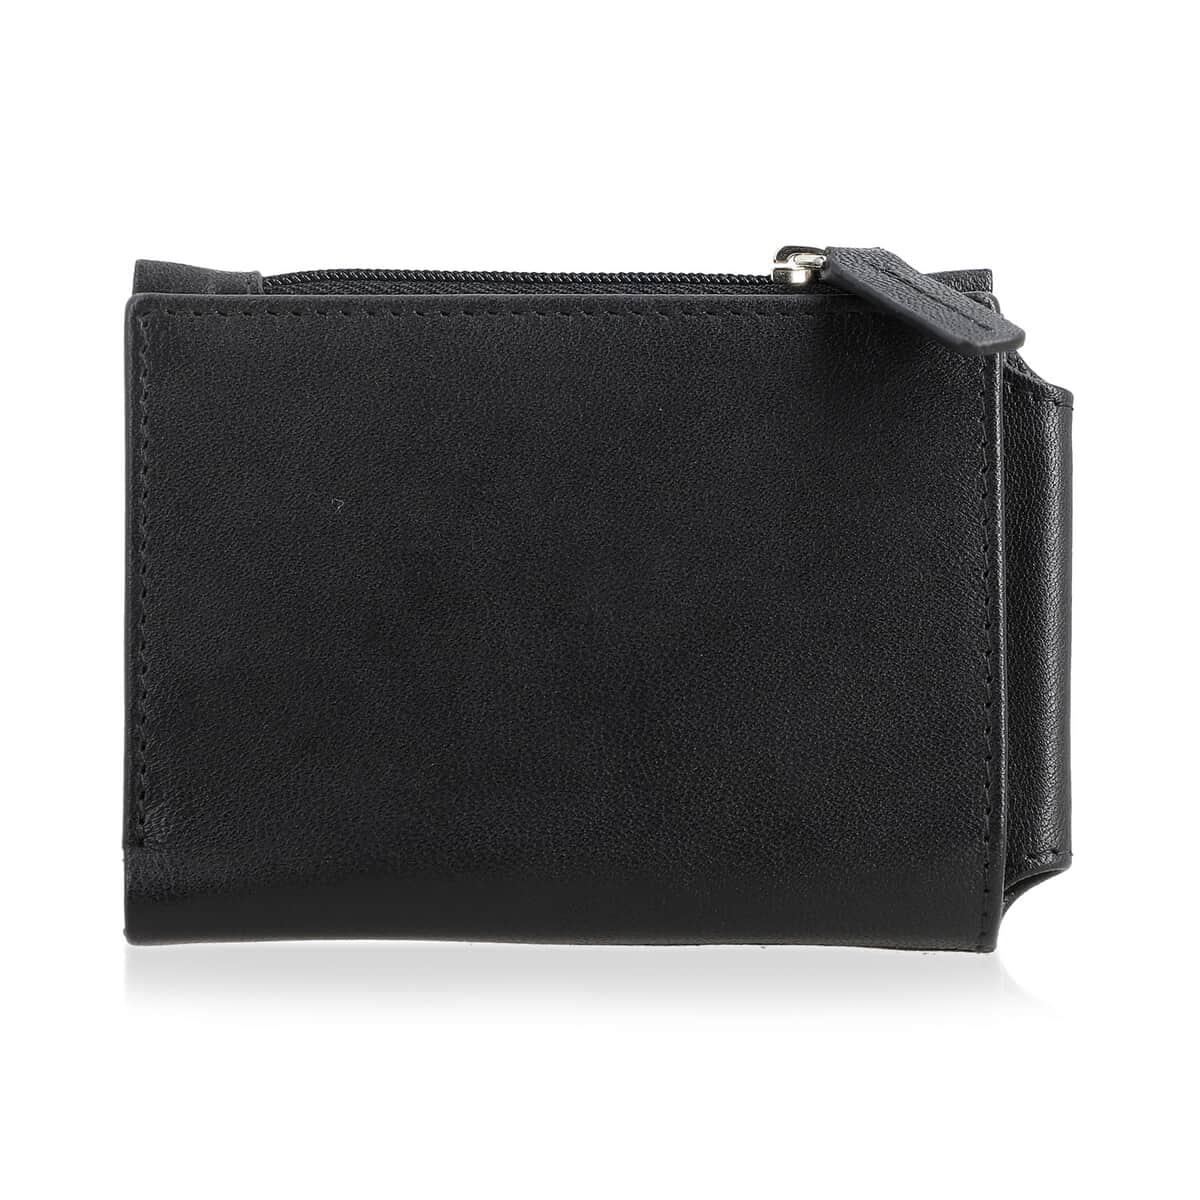 100% Genuine leather shoulder  bag DIMENSION-  BAG - 13.38 L x 13.77 H x 3.54 W inches Wallet Size -L(4.5)X H(3.34)X W(0.7) in COLOR: Black image number 4